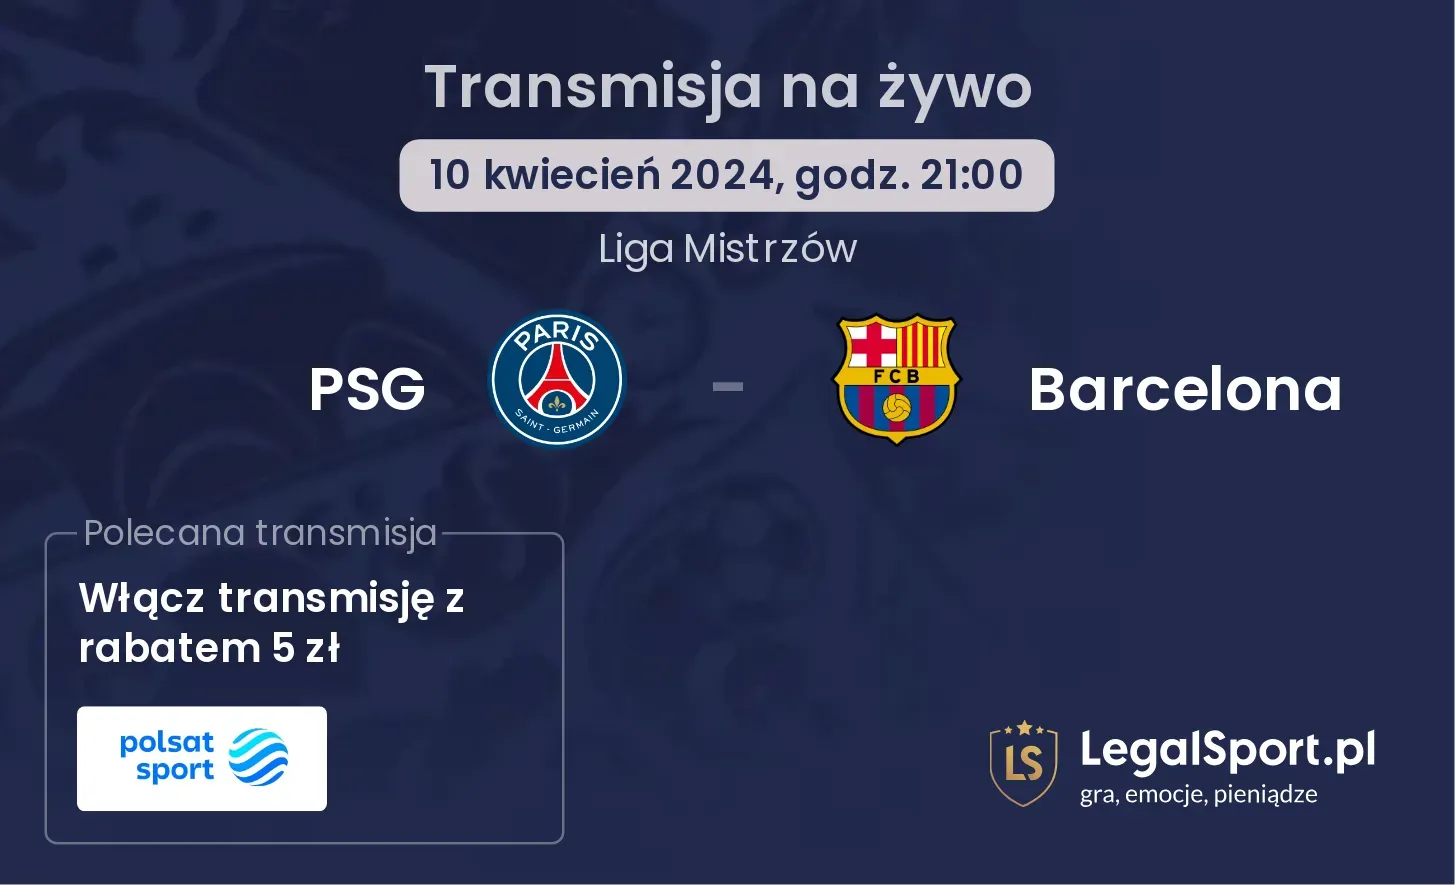 PSG - Barcelona transmisja na żywo